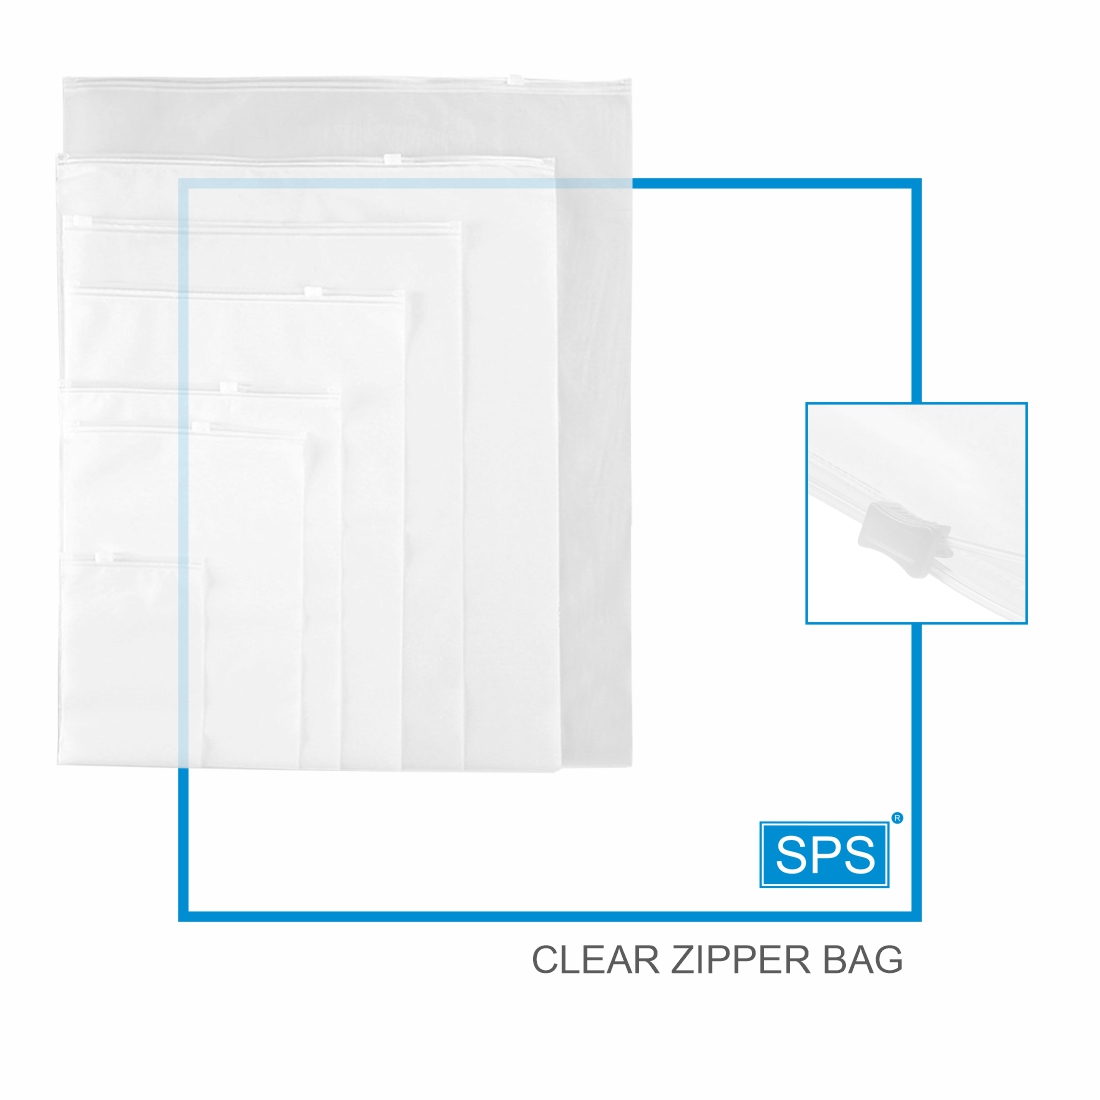 CLEAR ZIPPER BAG